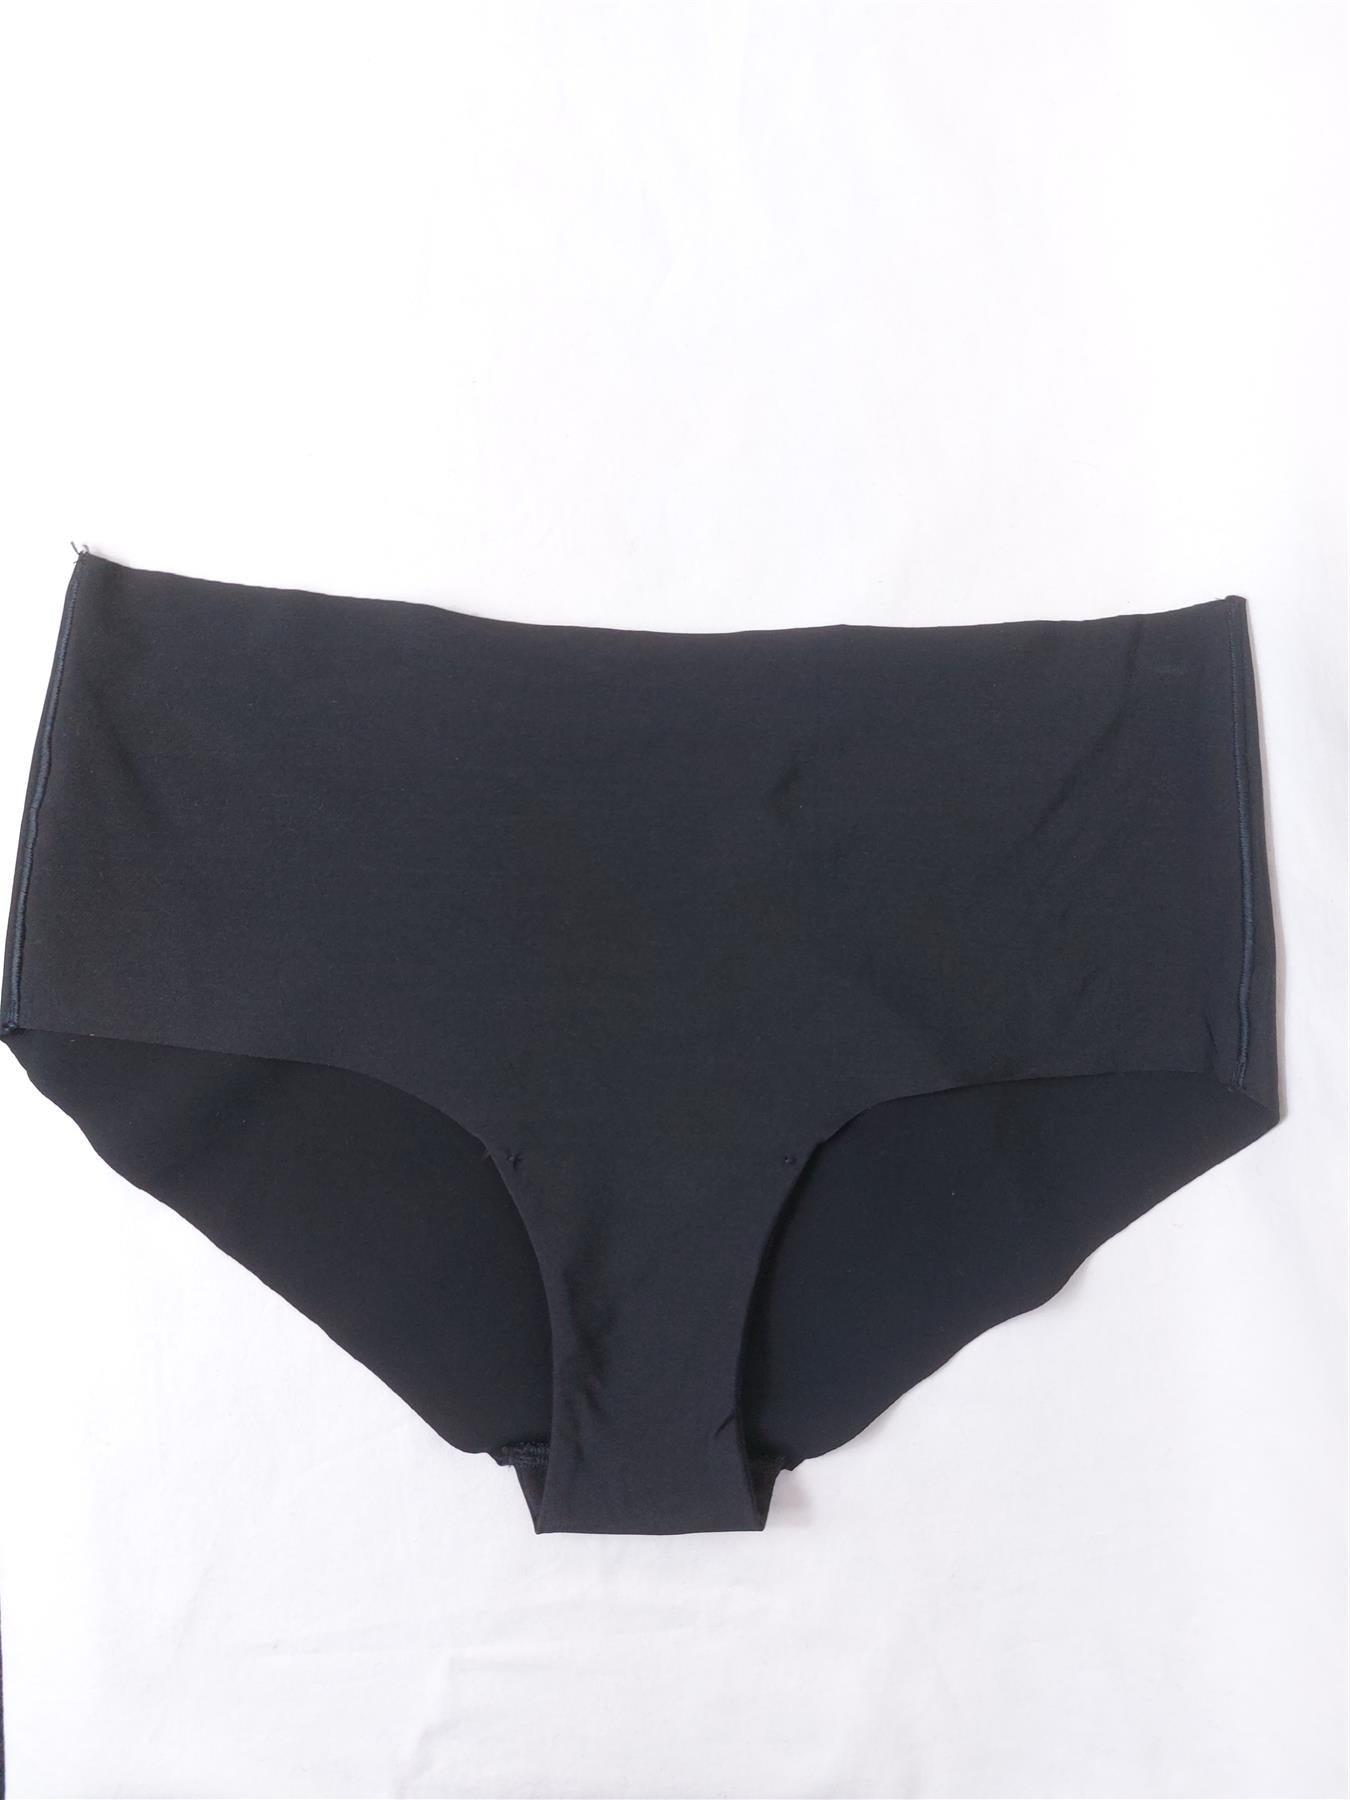 Oysho Women's Deep Short Knickers Laser Cut No VPL Soft Comfort Cotton Lined Black L